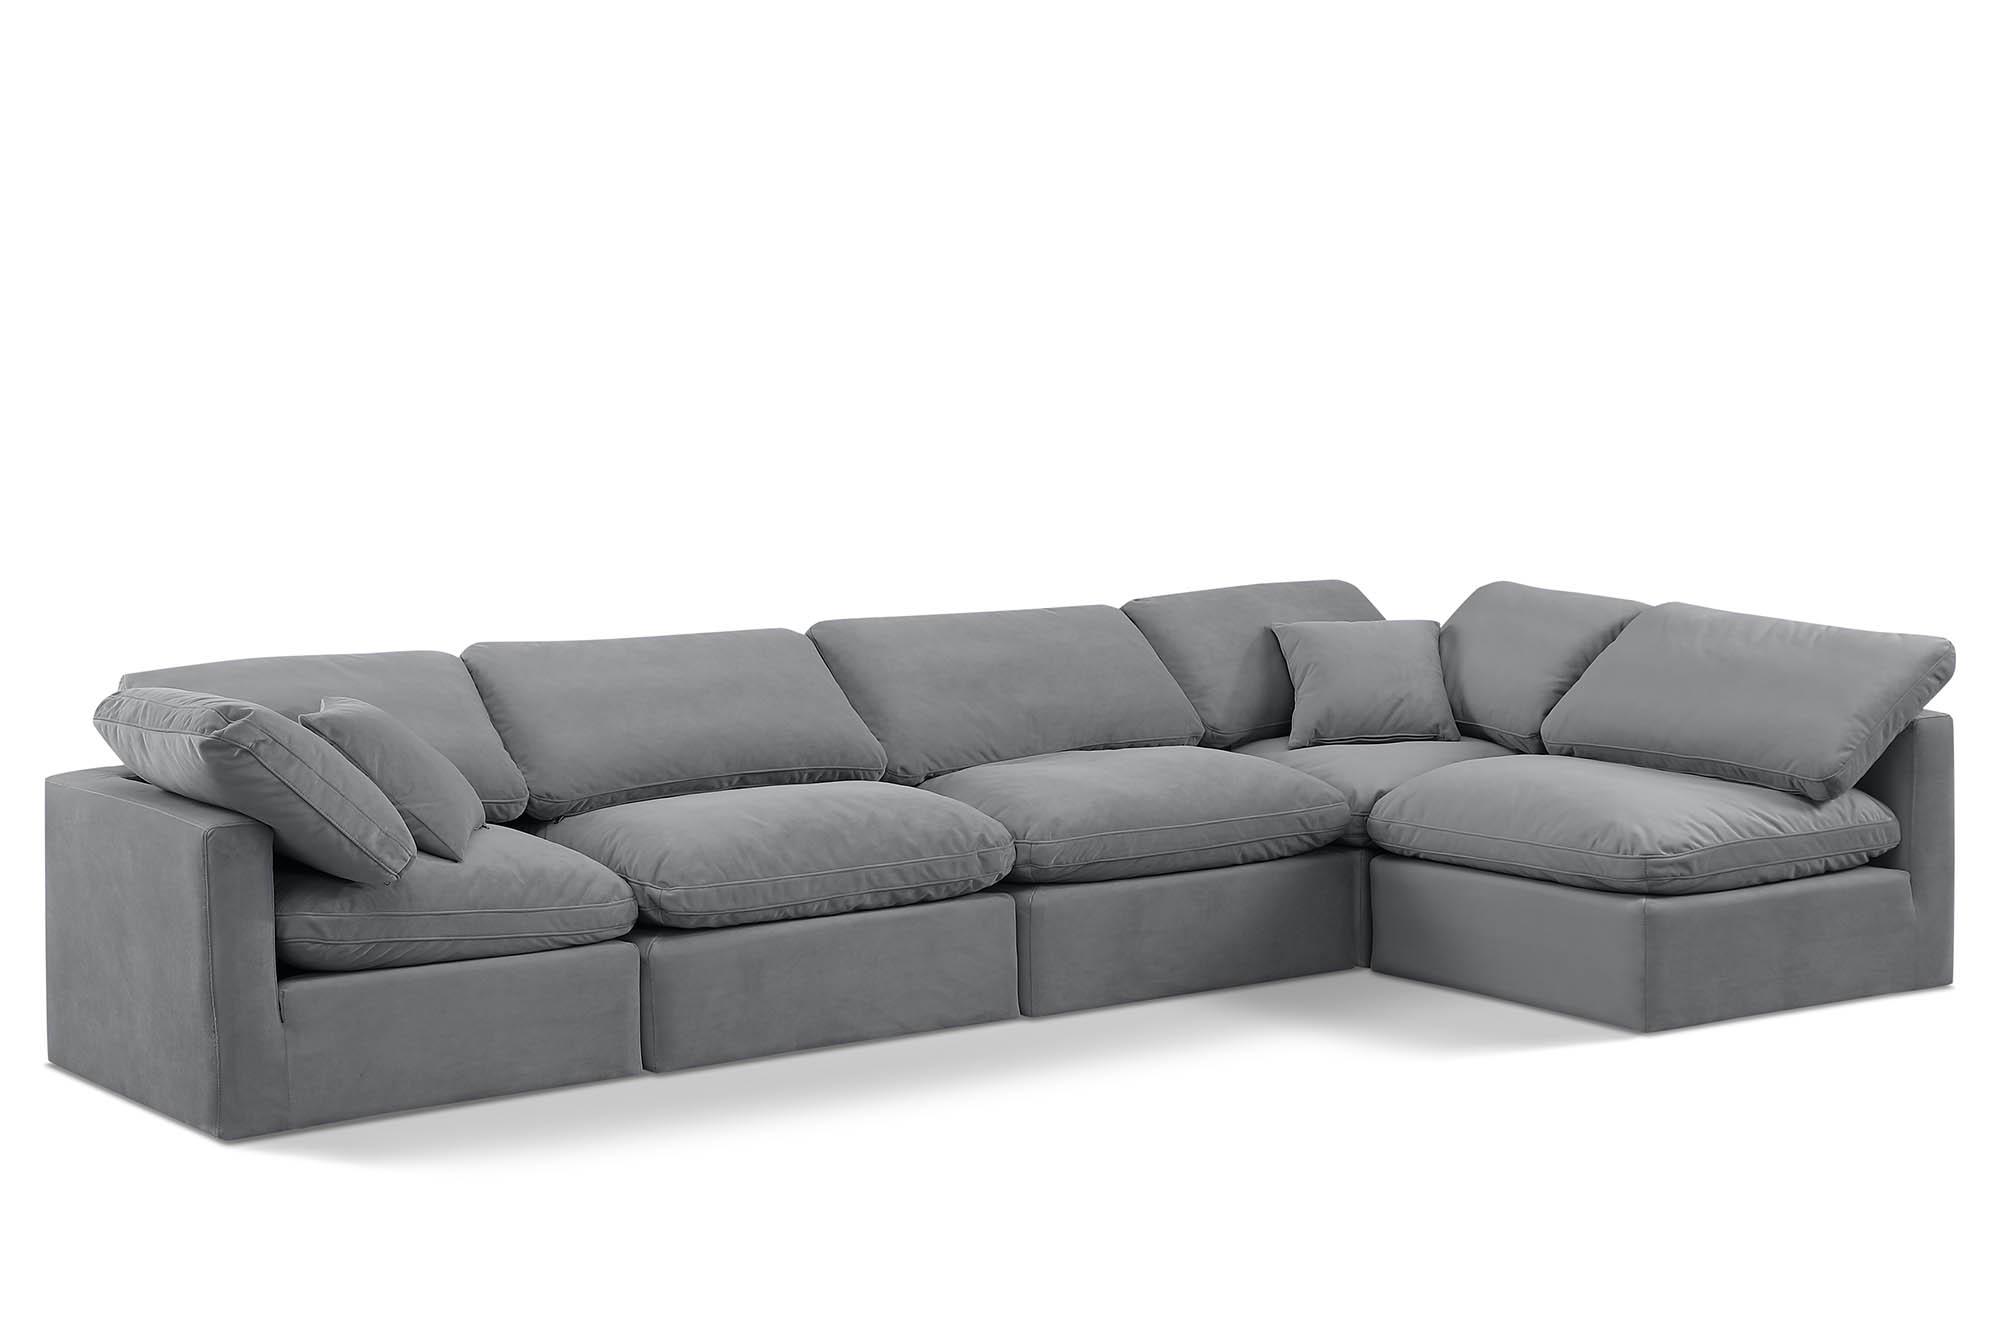 Contemporary, Modern Modular Sectional Sofa INDULGE 147Grey-Sec5D 147Grey-Sec5D in Gray Velvet